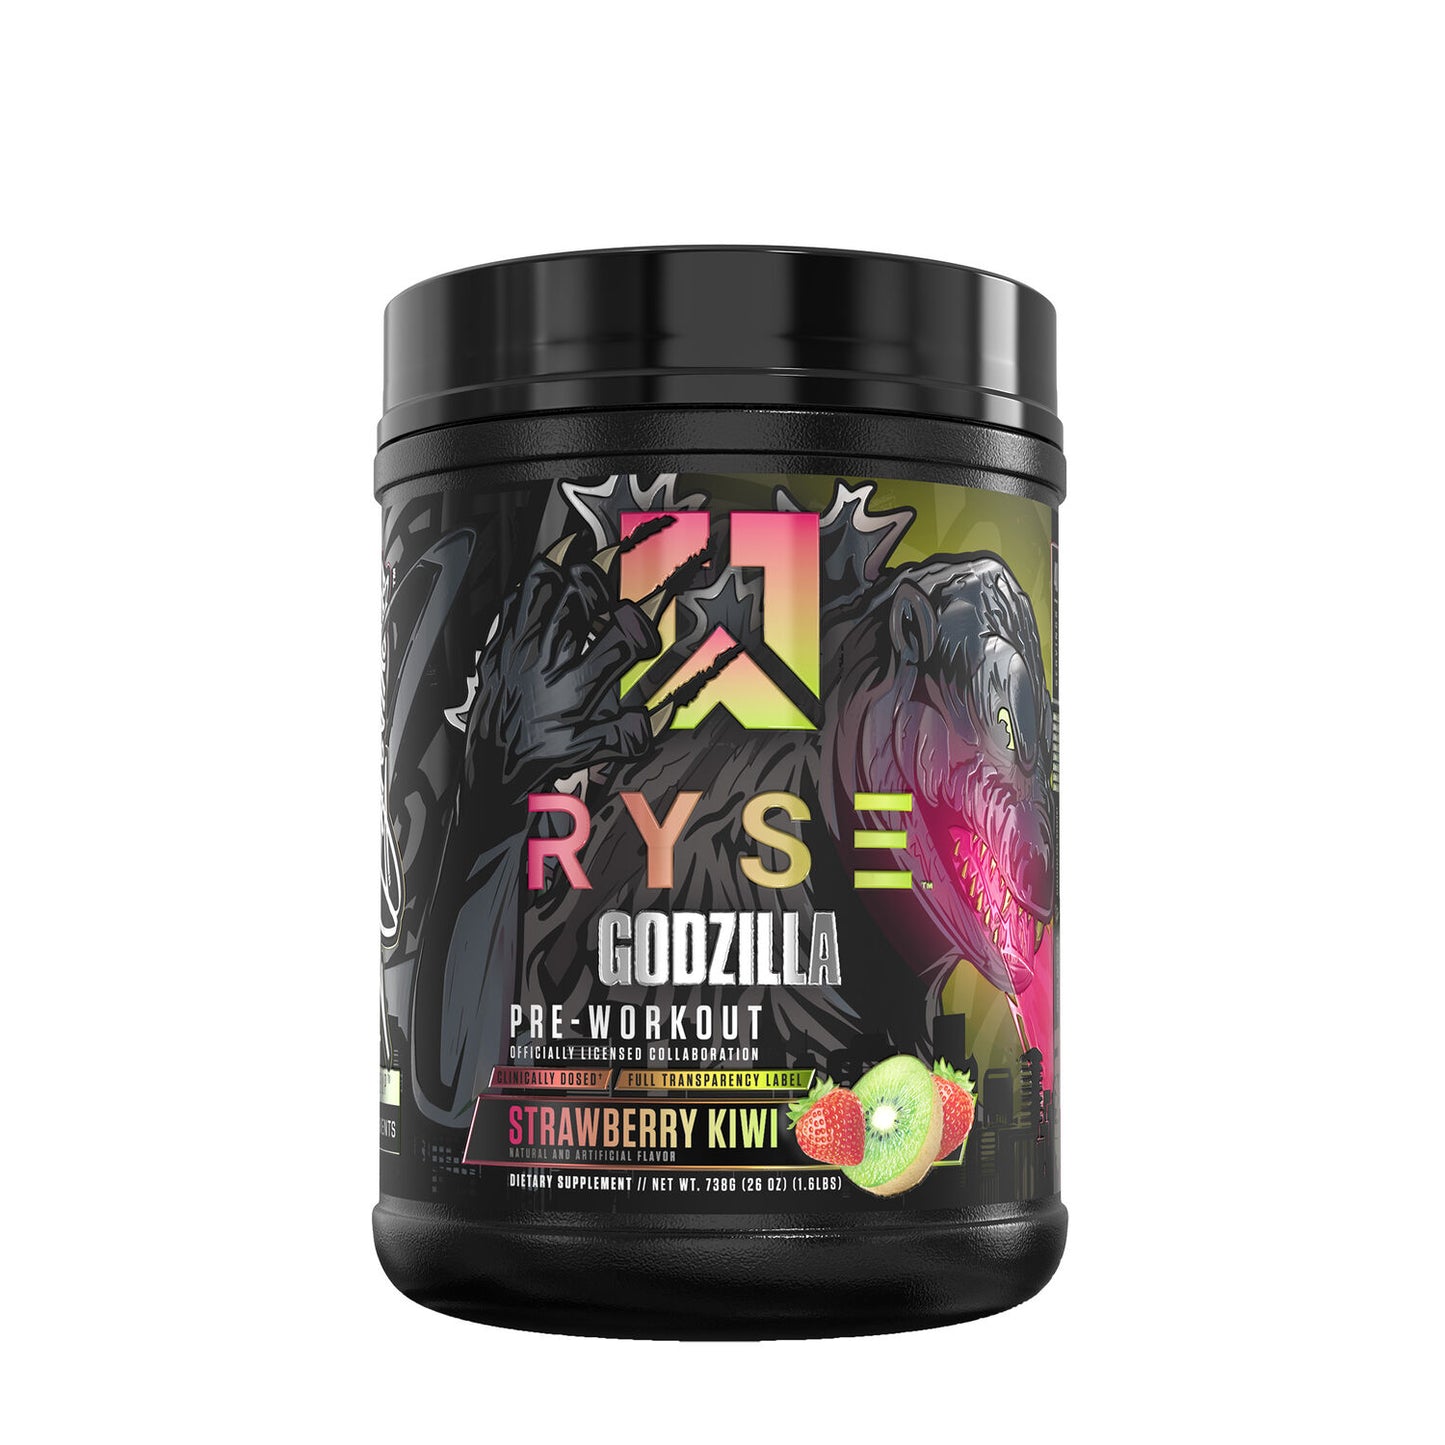 Ryse Godzilla